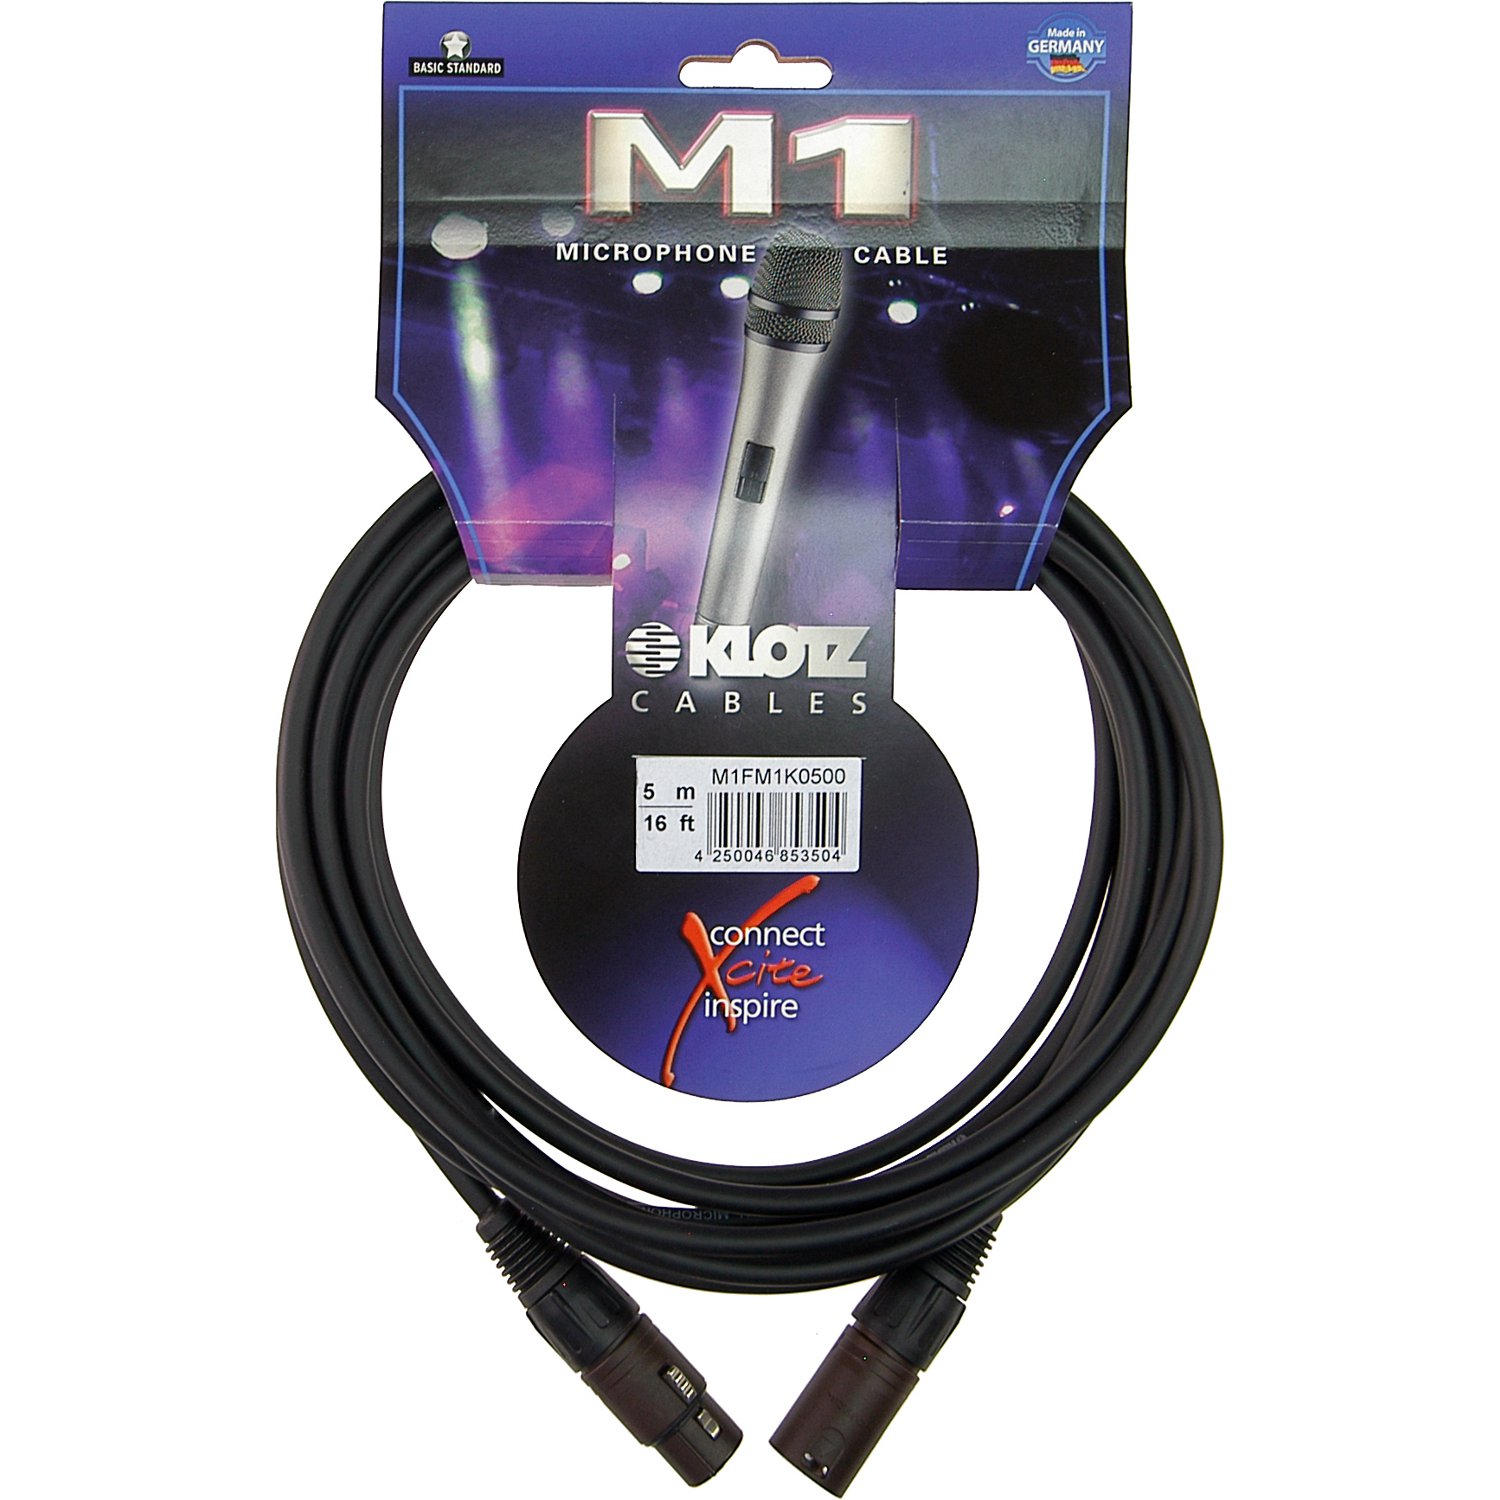 Klotz M1FM1N1000 Microphone kabel 10m